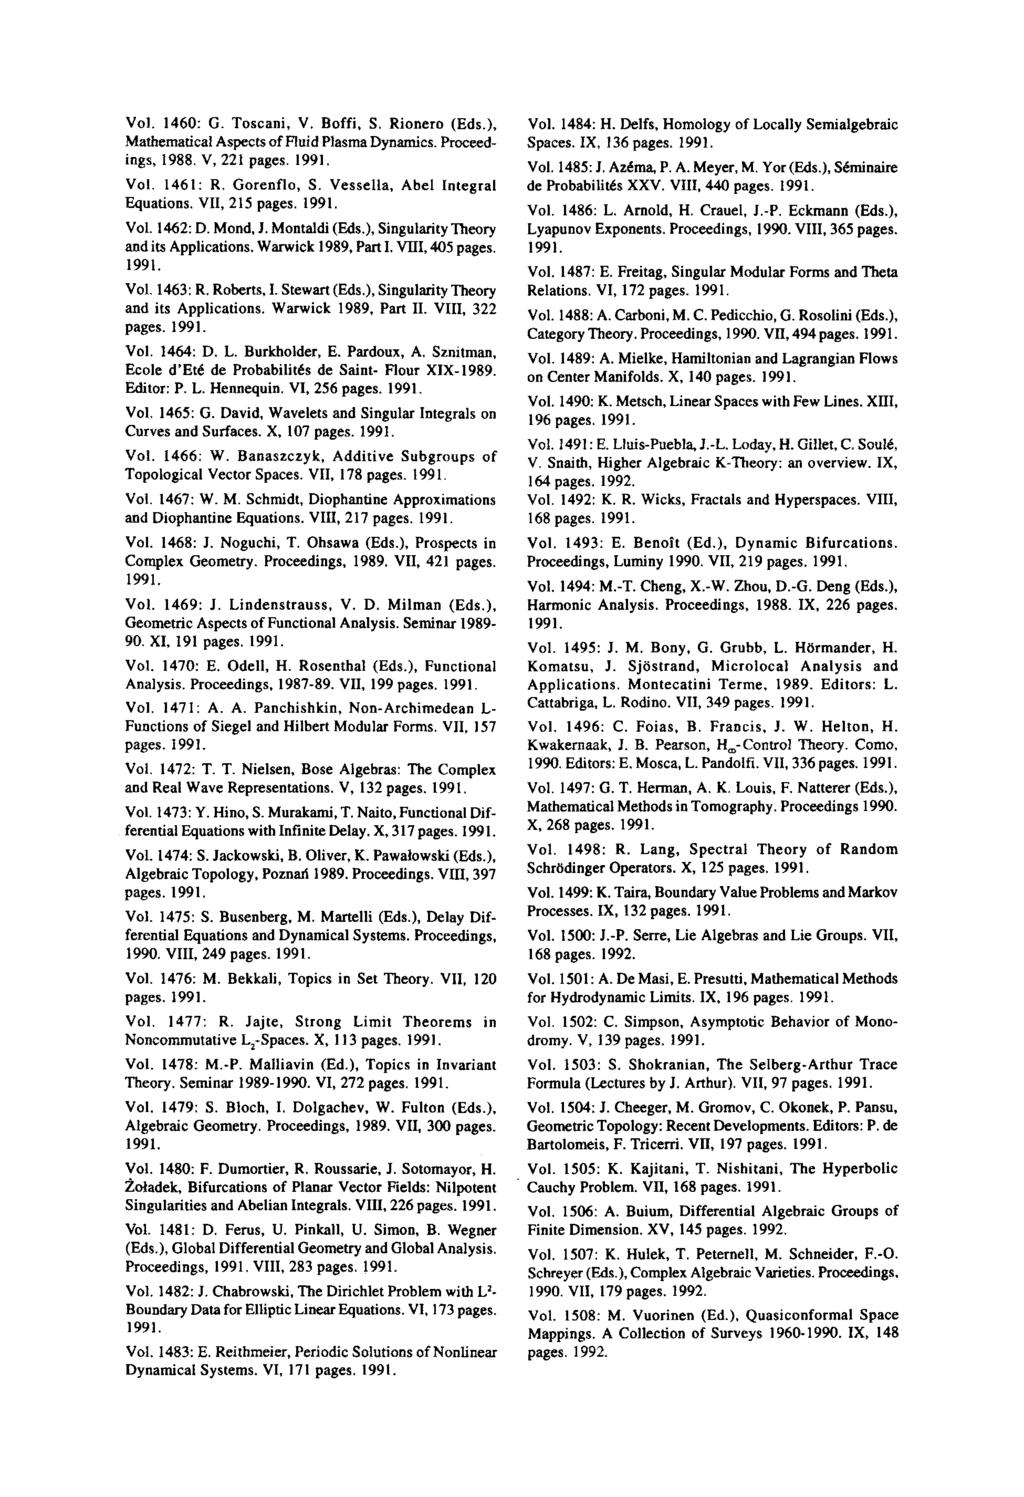 Vol. 1460: G. Toscani, V. Boffi, S. Rionero (Eds.), Mathematical Aspects of Fluid Plasma Dynamics. Proceedings, 1988. V, 221 pages. 1991. Vol. 1461: R. Gorenflo, S. Vessella, Abel Integral Equations.